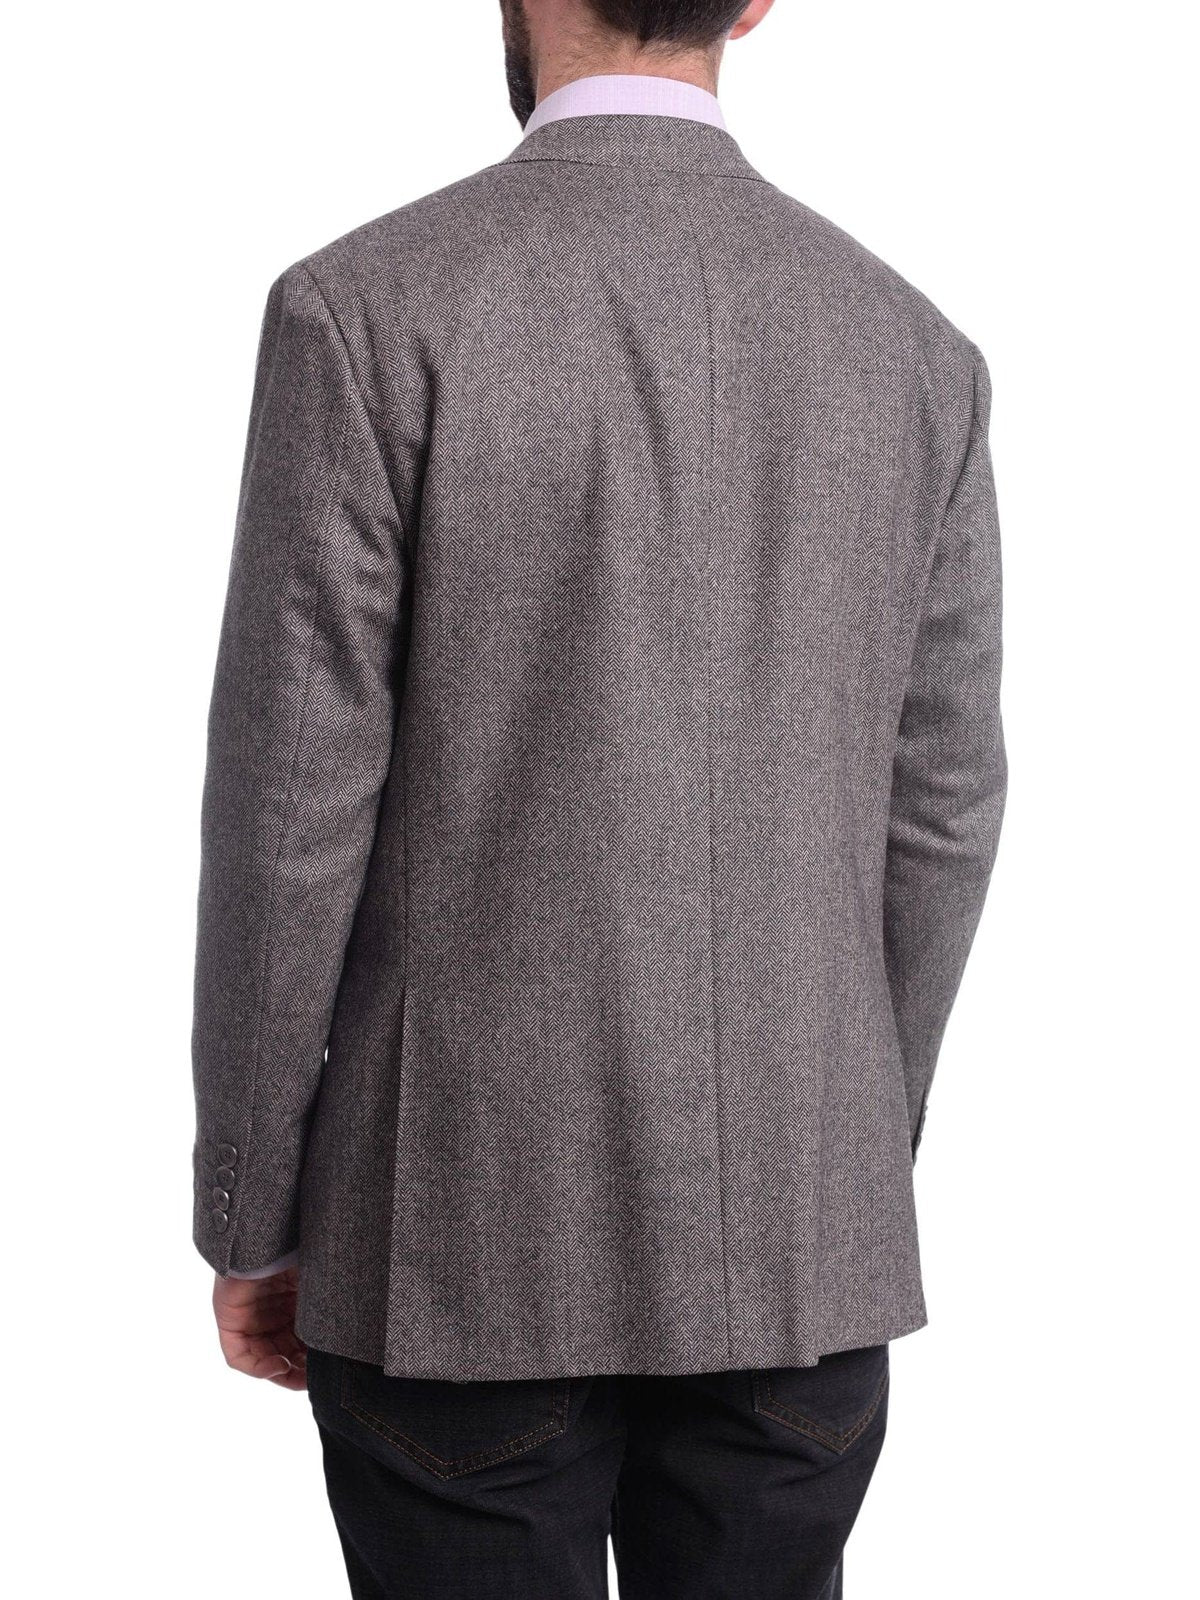 Napoli BLAZERS Napoli Slim Fit Gray Herringbone Half Canvassed Cashmere Blazer Sportcoat